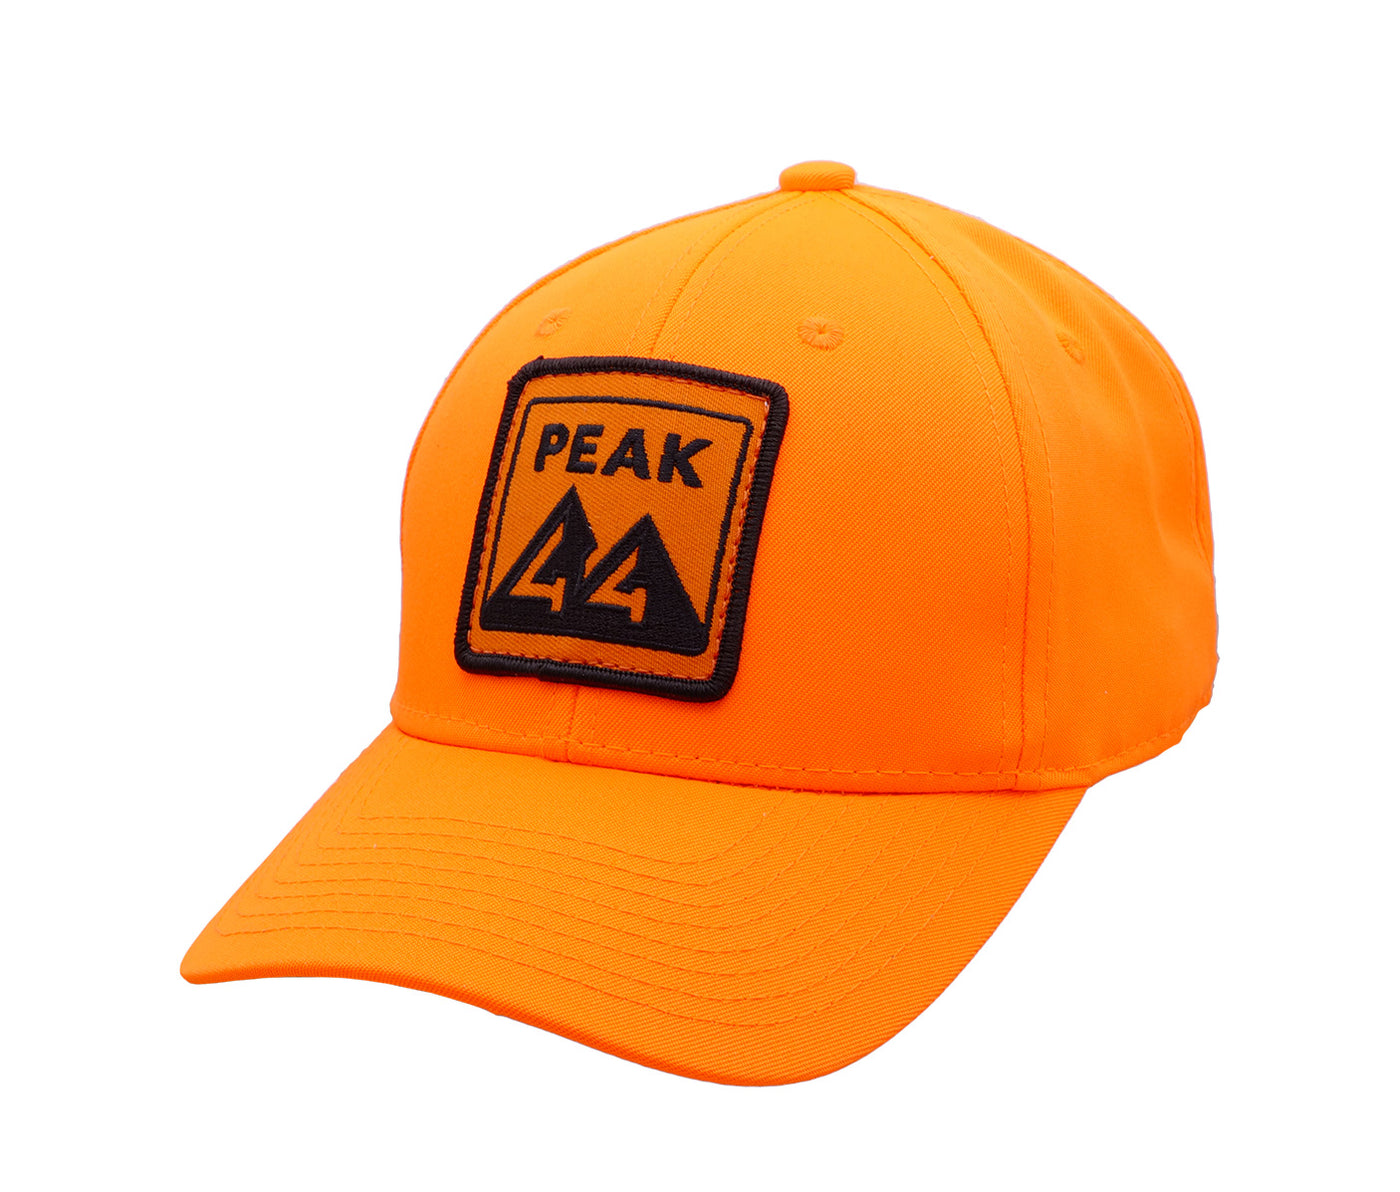 Peak 44 Blaze Orange Hat